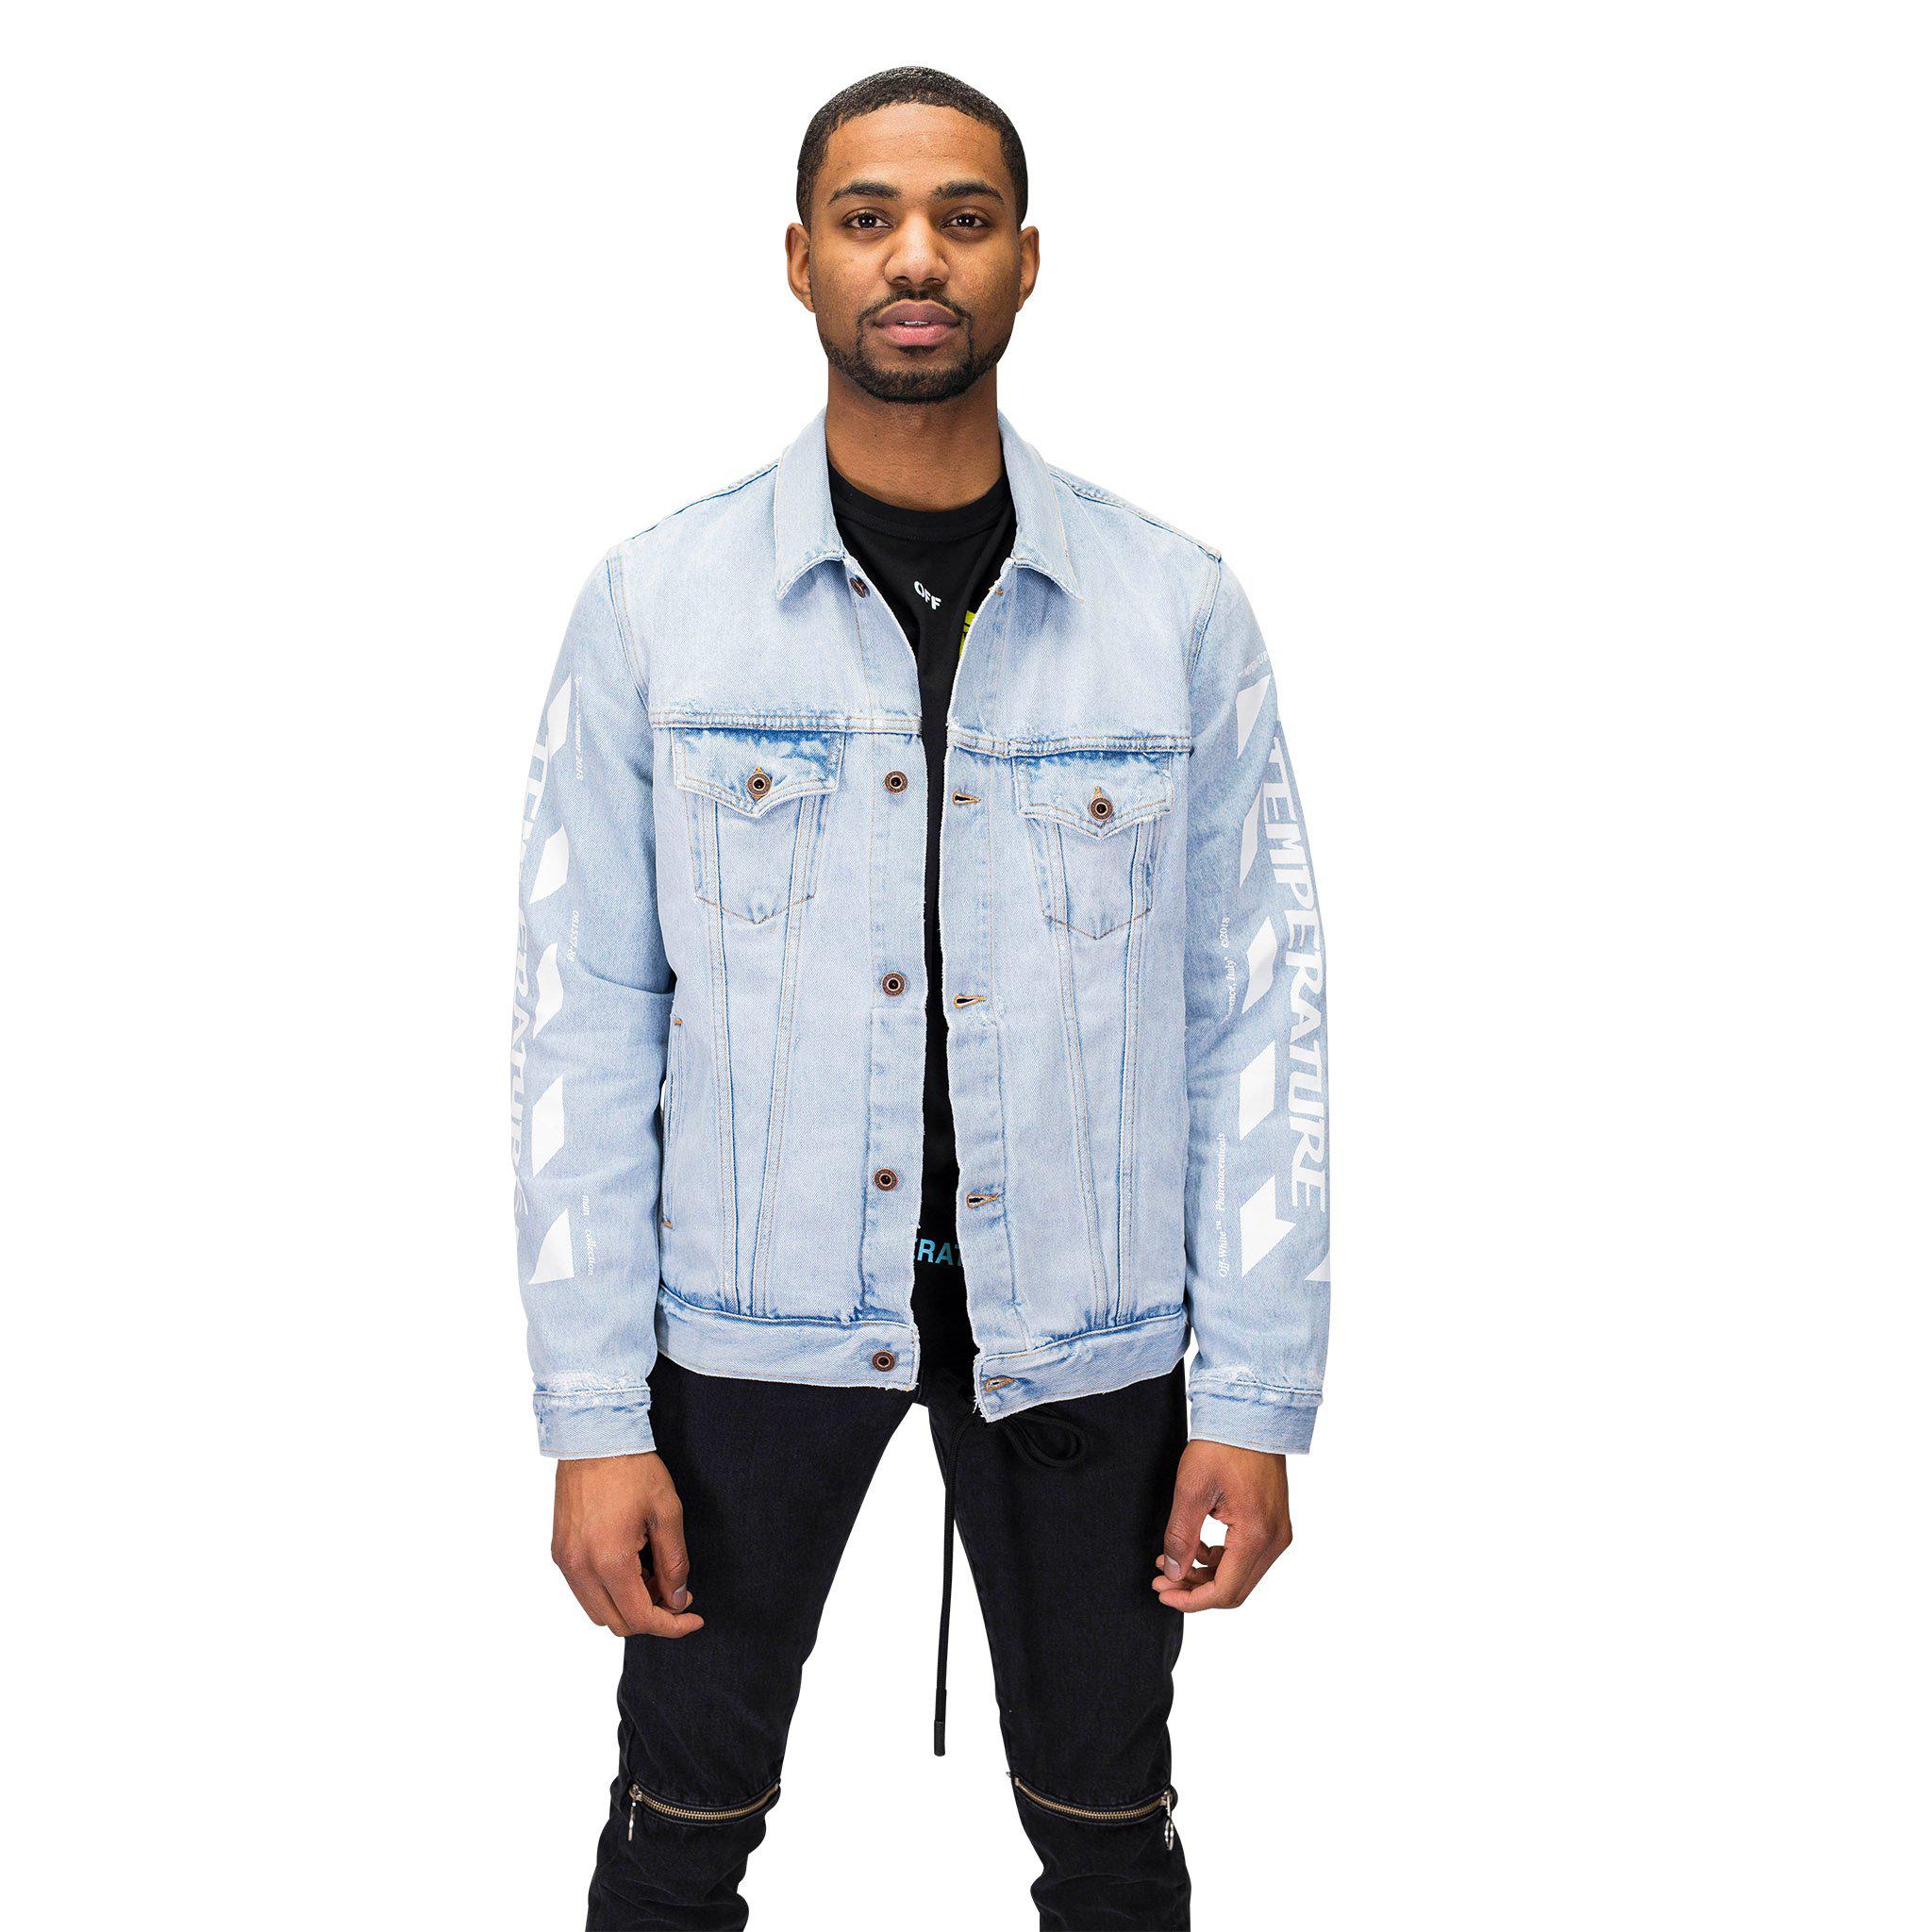 Off-White c/o Virgil Abloh Denim 'temperature' Oversized Jean Jacket in  Blue for Men - Lyst